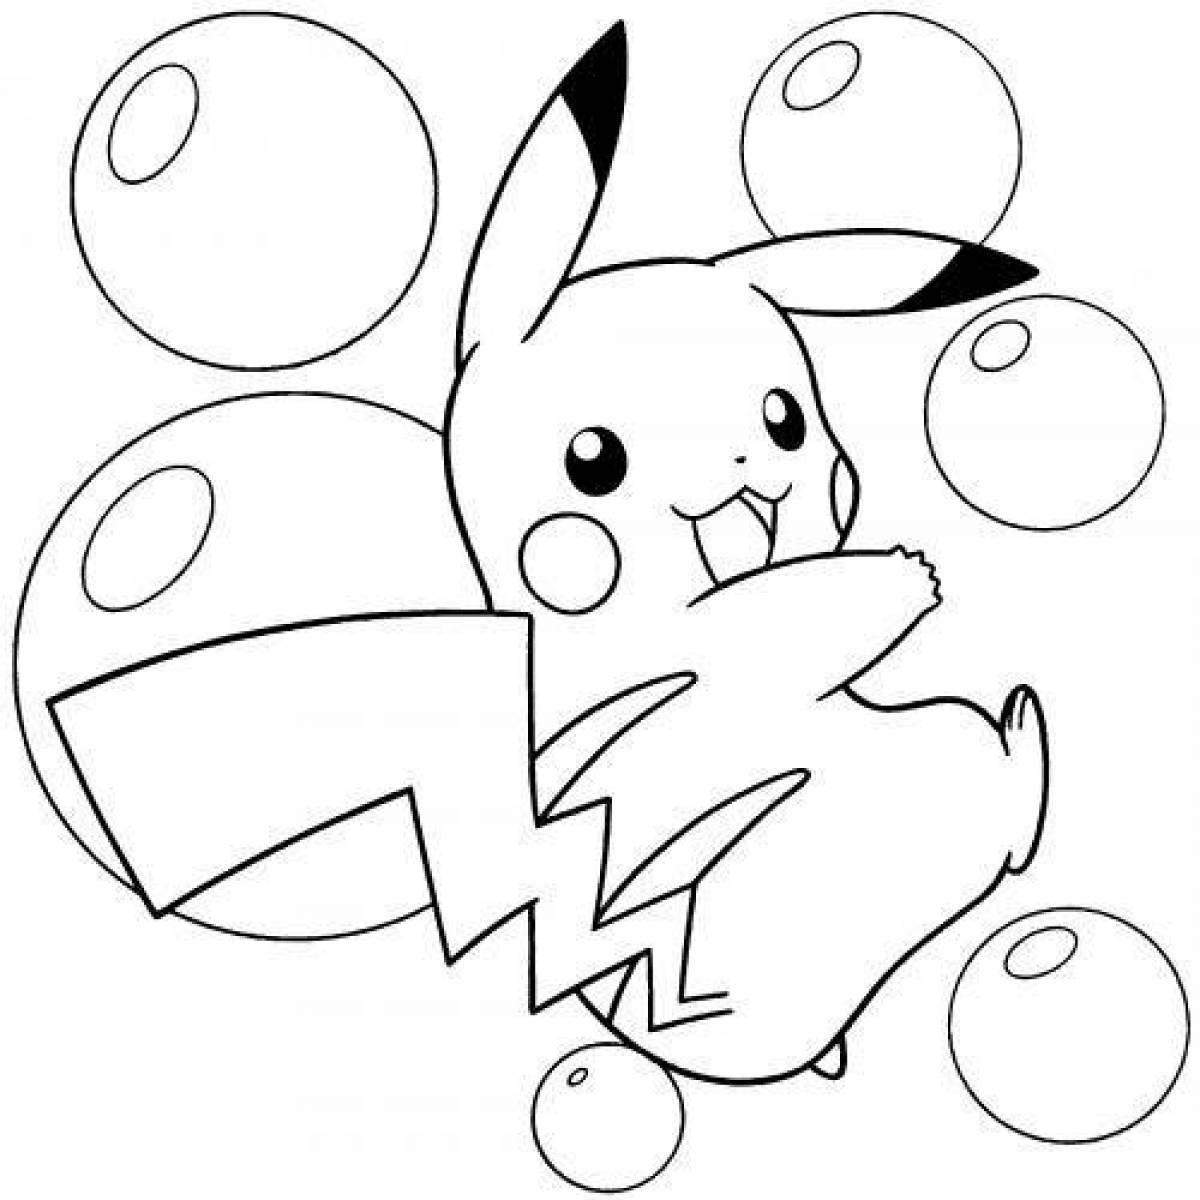 Pikachu with soap bubbles